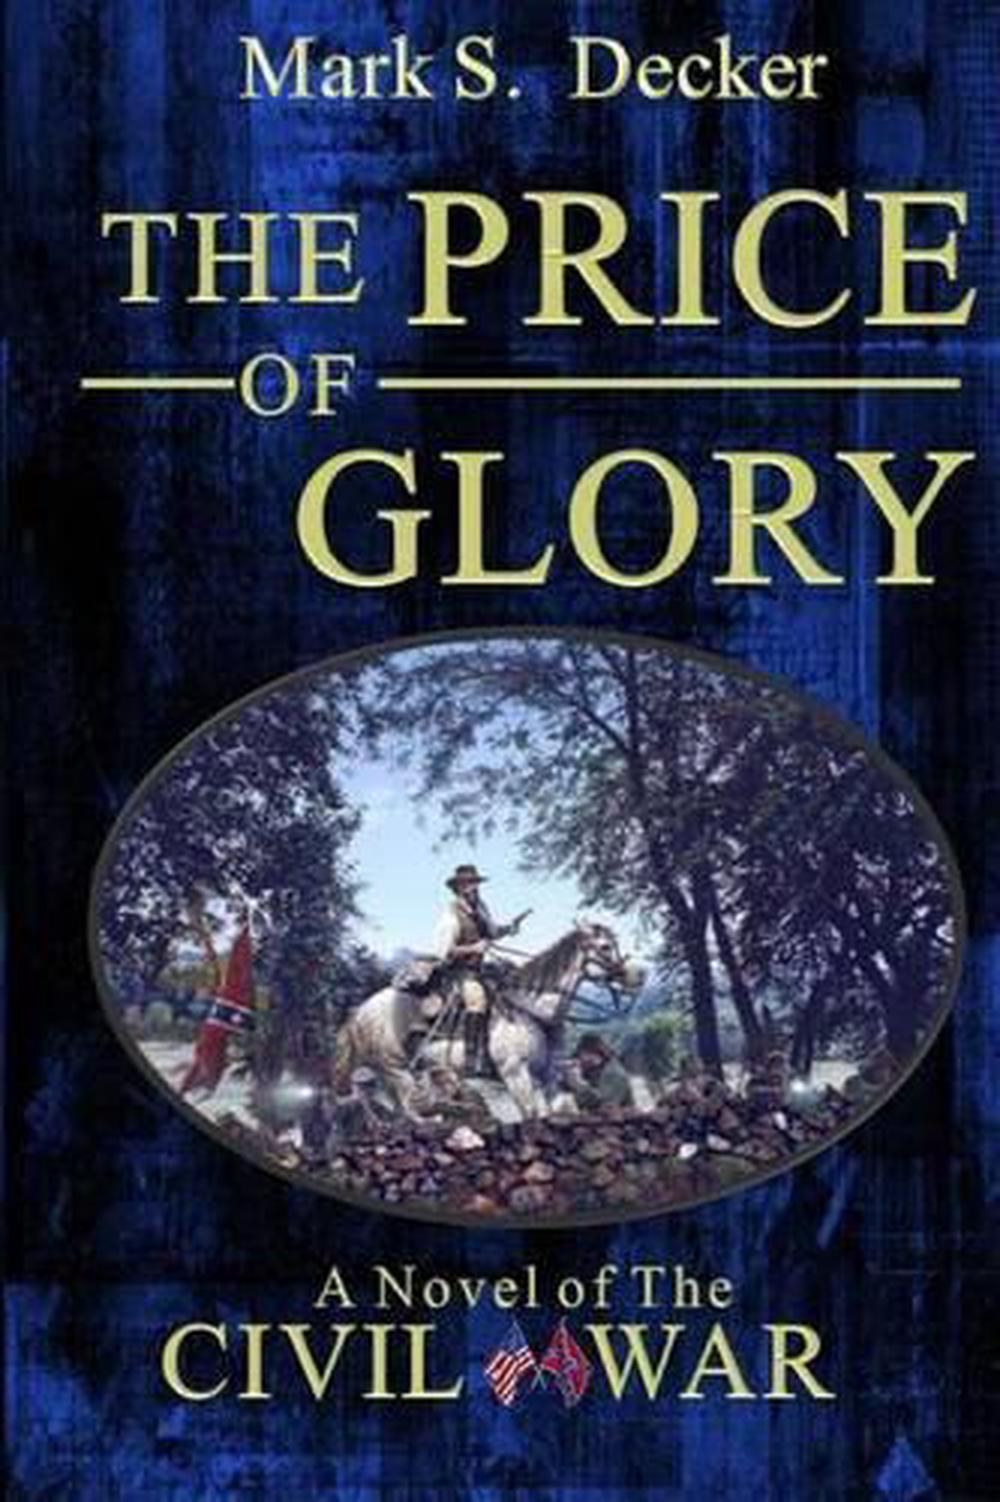 The Price of Glory by Caroline Warfield